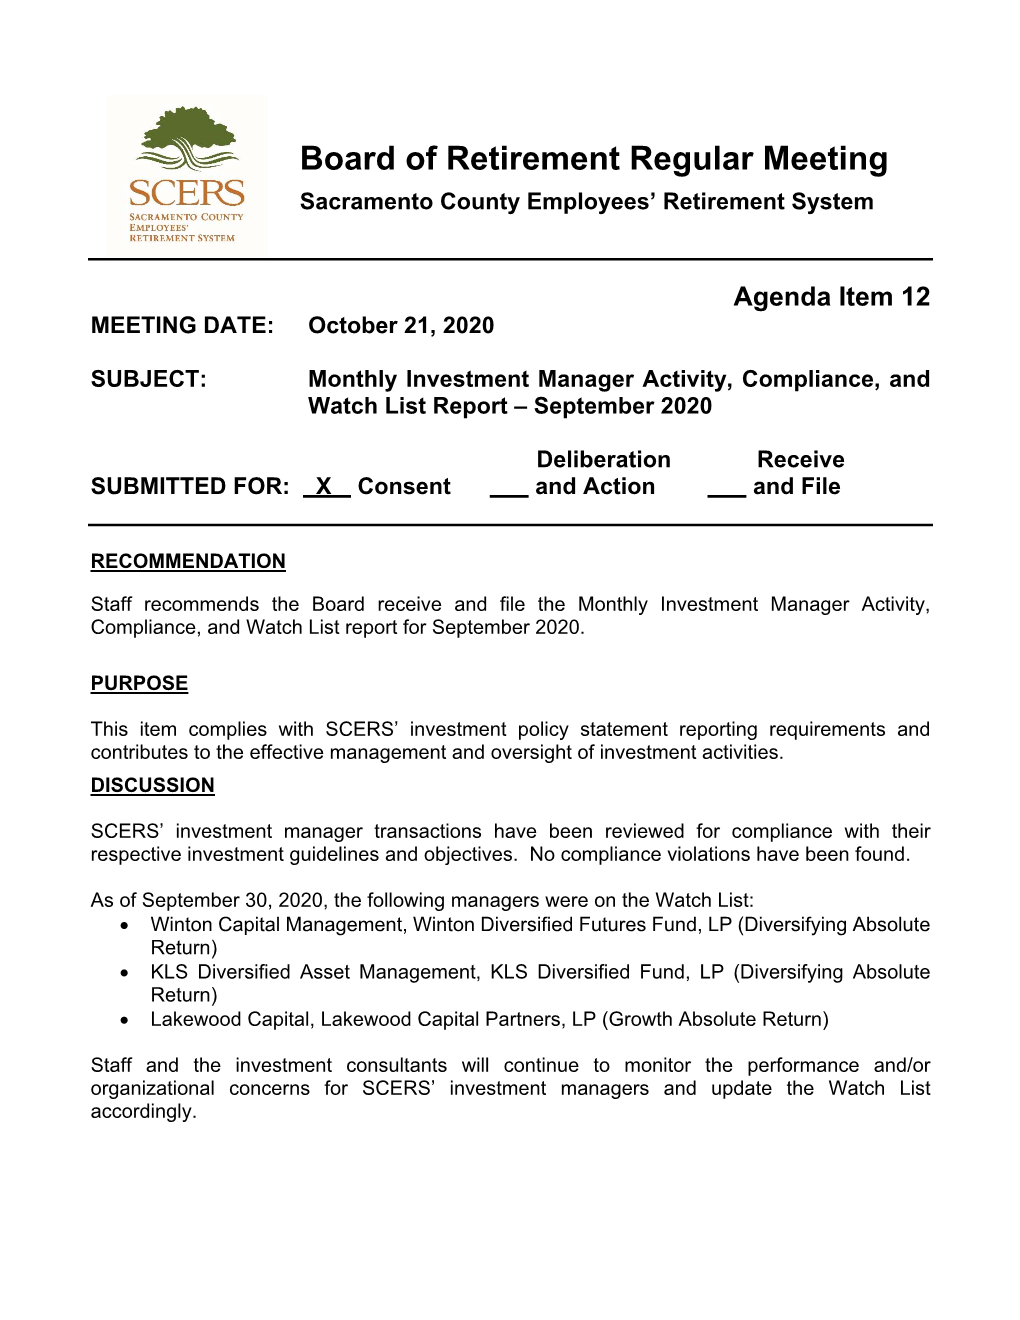 Agenda Item 12 MEETING DATE: October 21, 2020